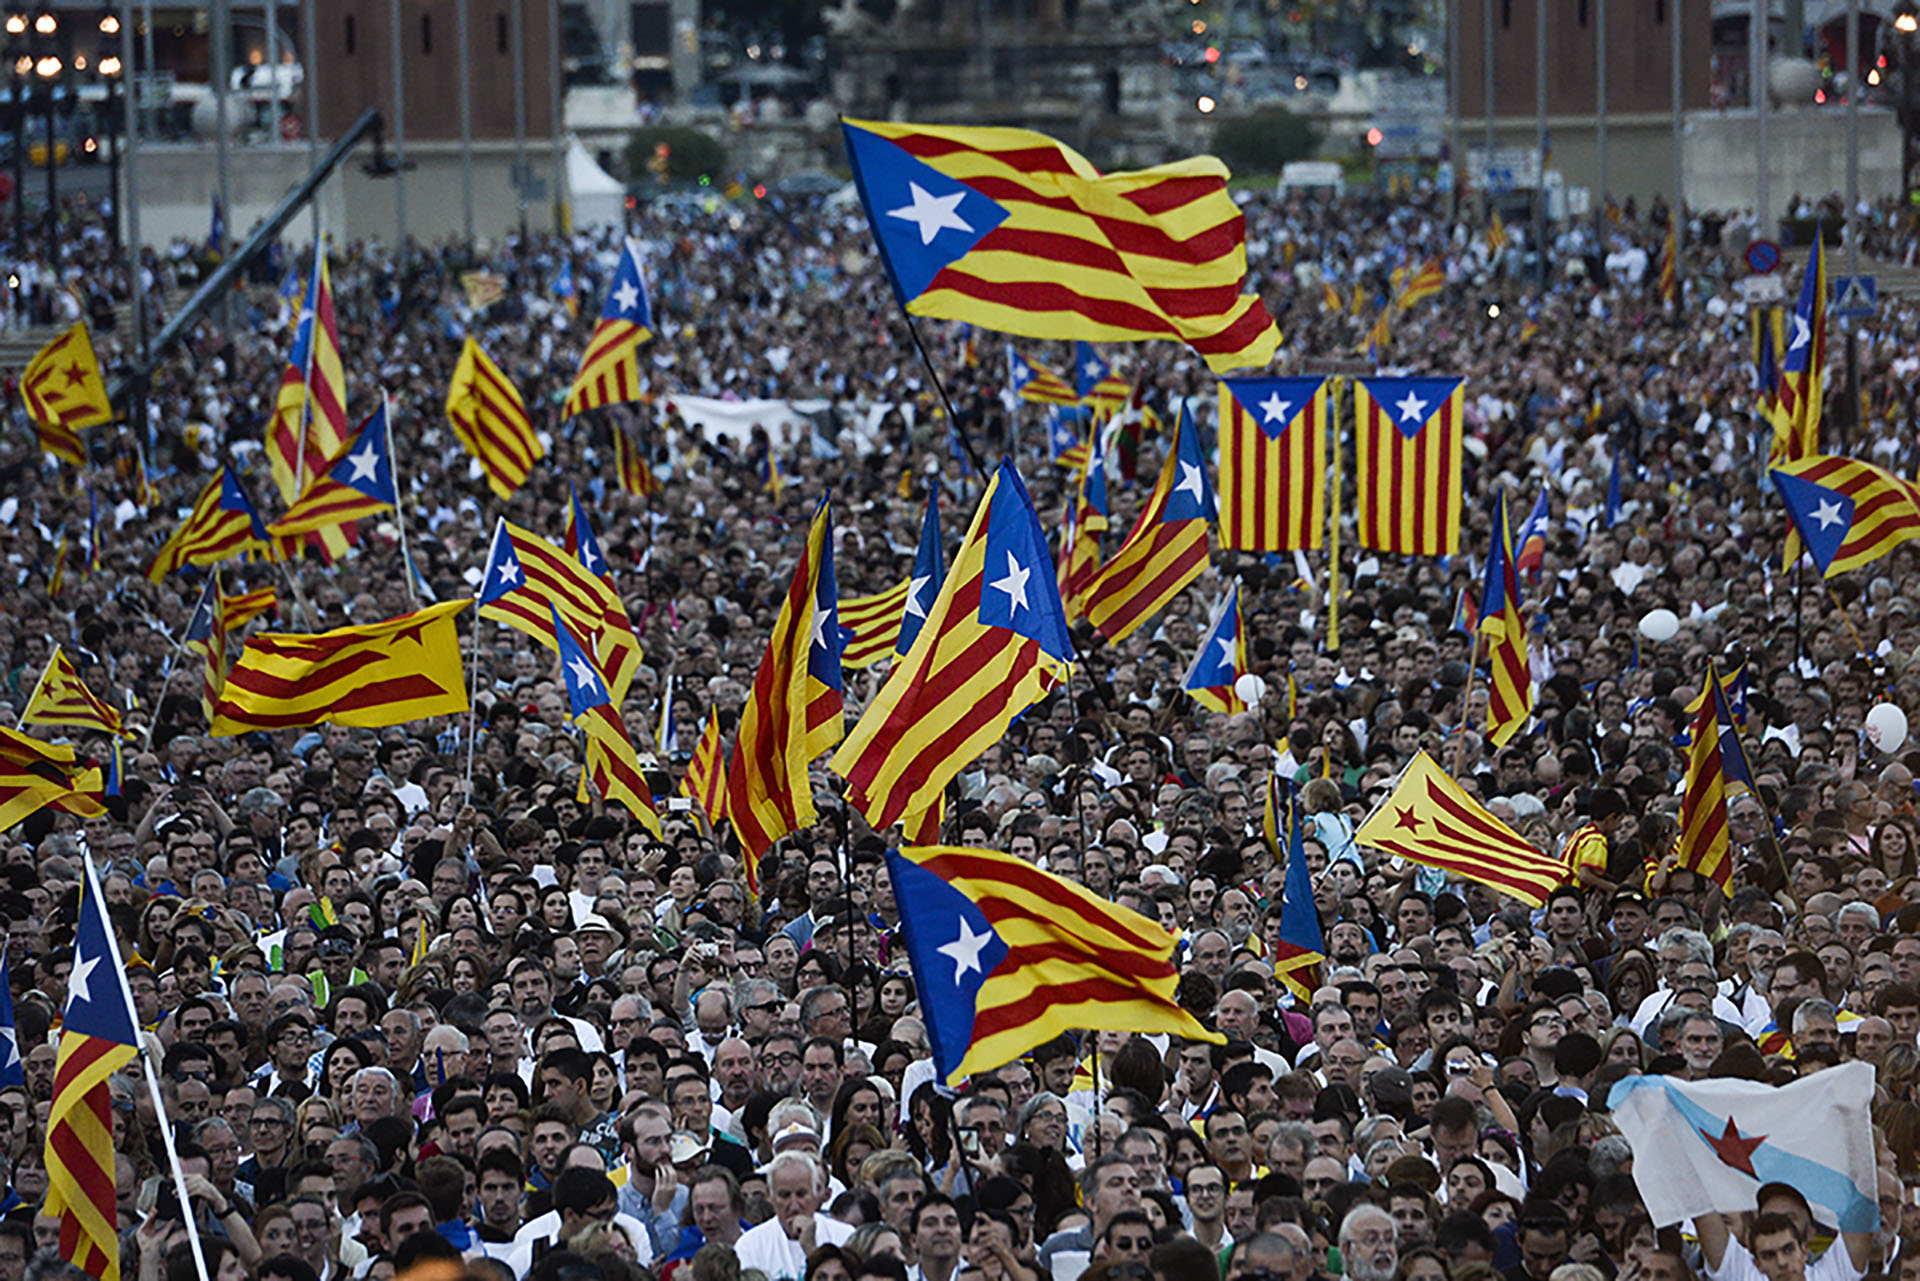 Catalonia region fights Spanish central gov’t for autonomy with referendum